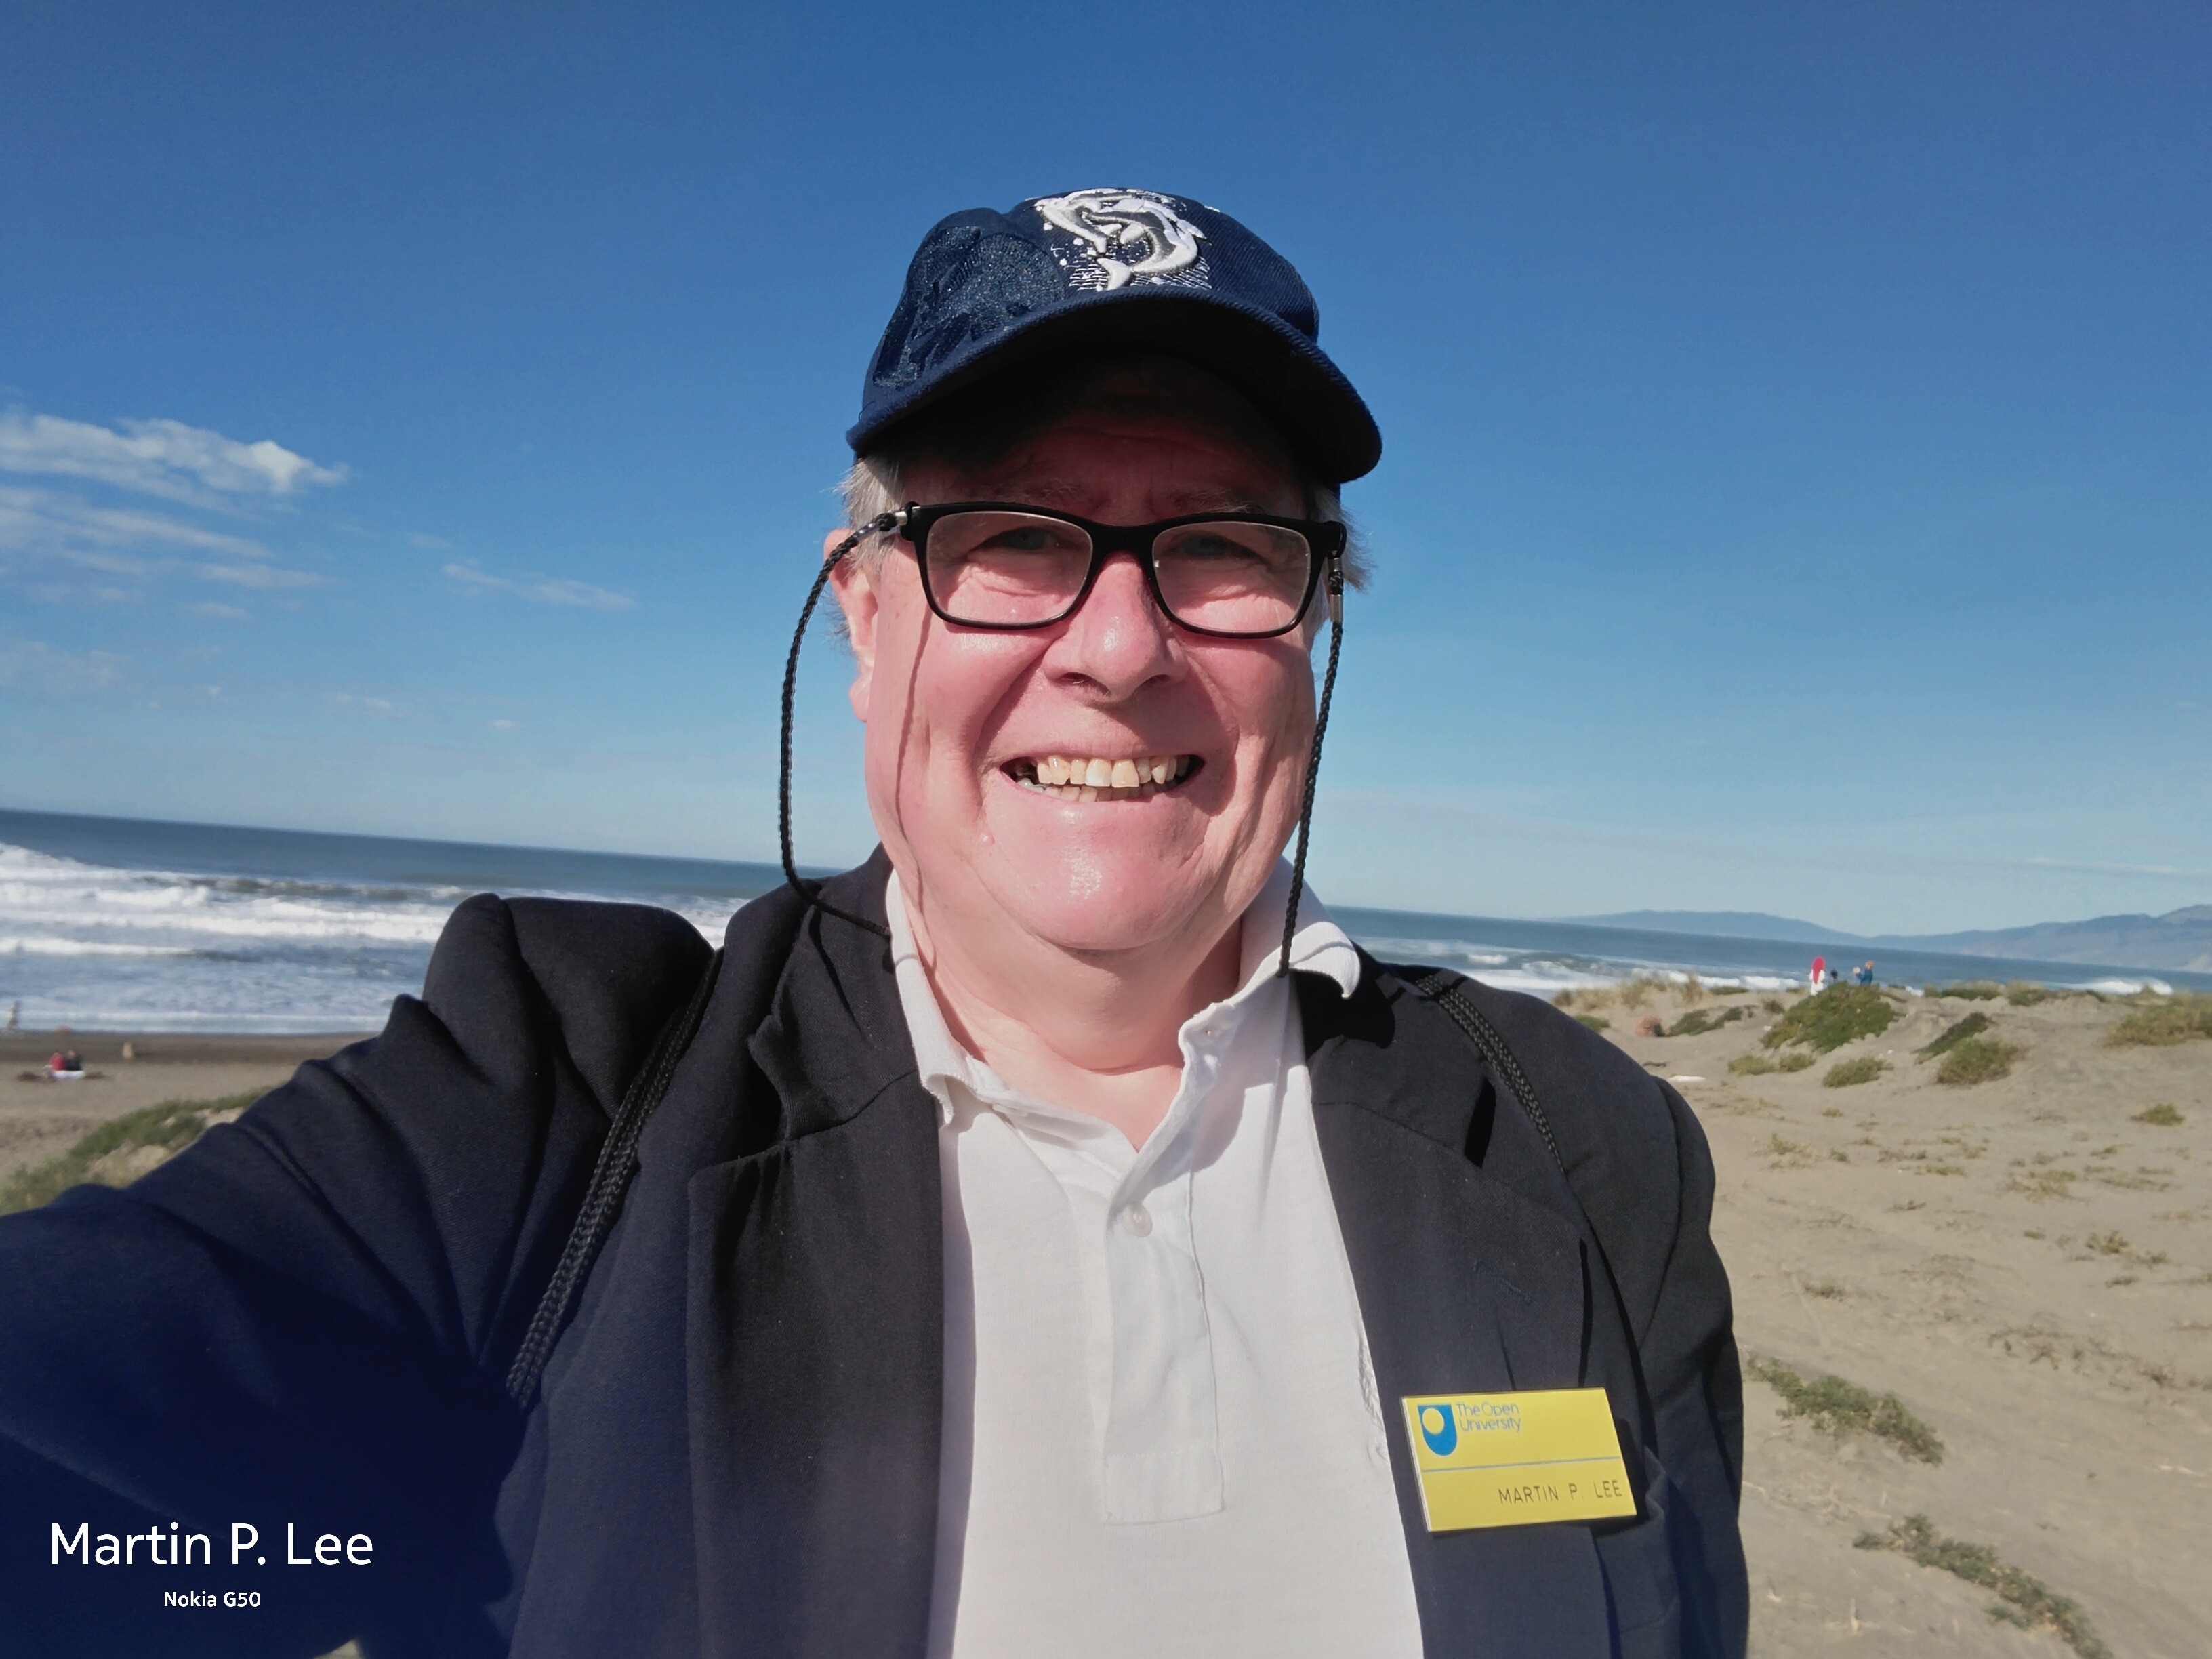 Martin P. Lee at the Ocean Beach, San Francisco, California, USA